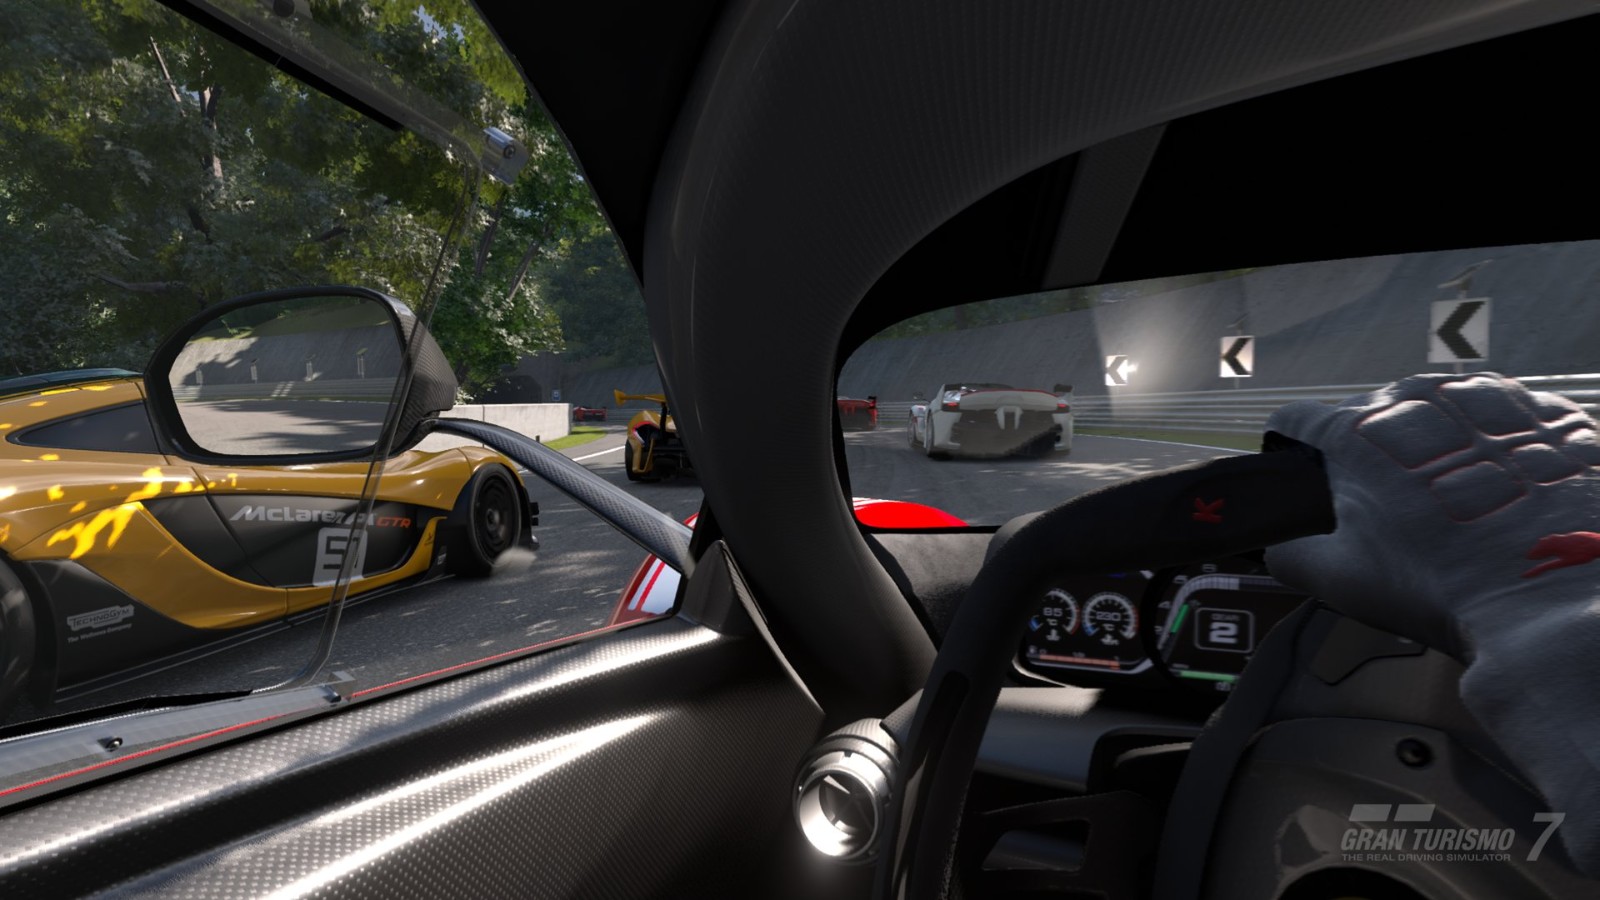 《GT赛车7》将于2月21日升级更新 获得PS VR2支持 二次世界 第3张